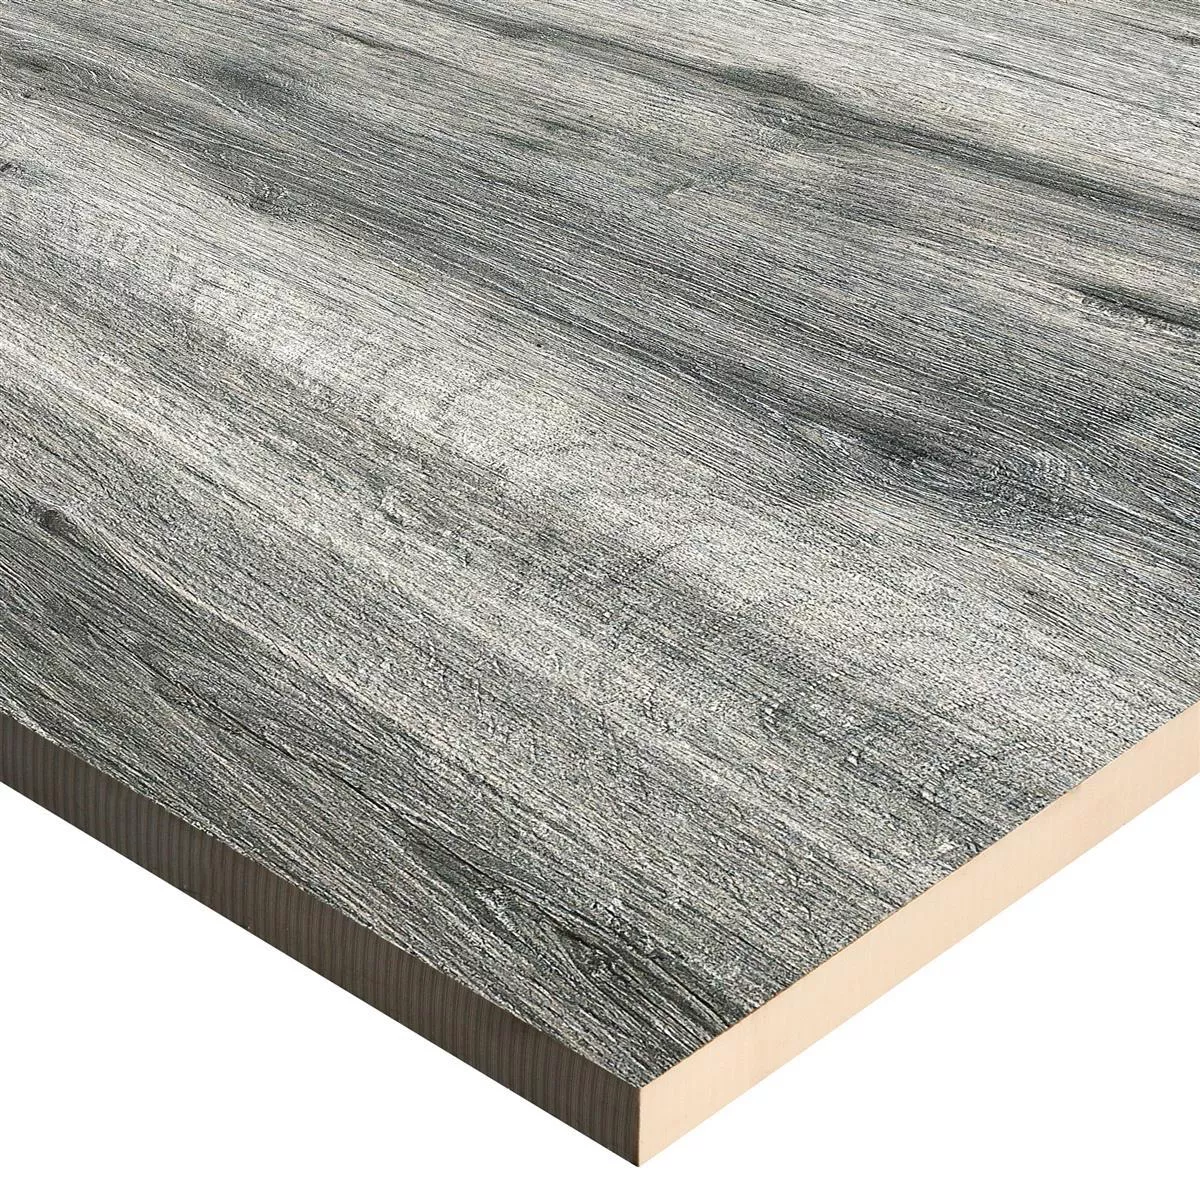 Terrace Tiles Starwood Wood Optic Grey 60x60cm